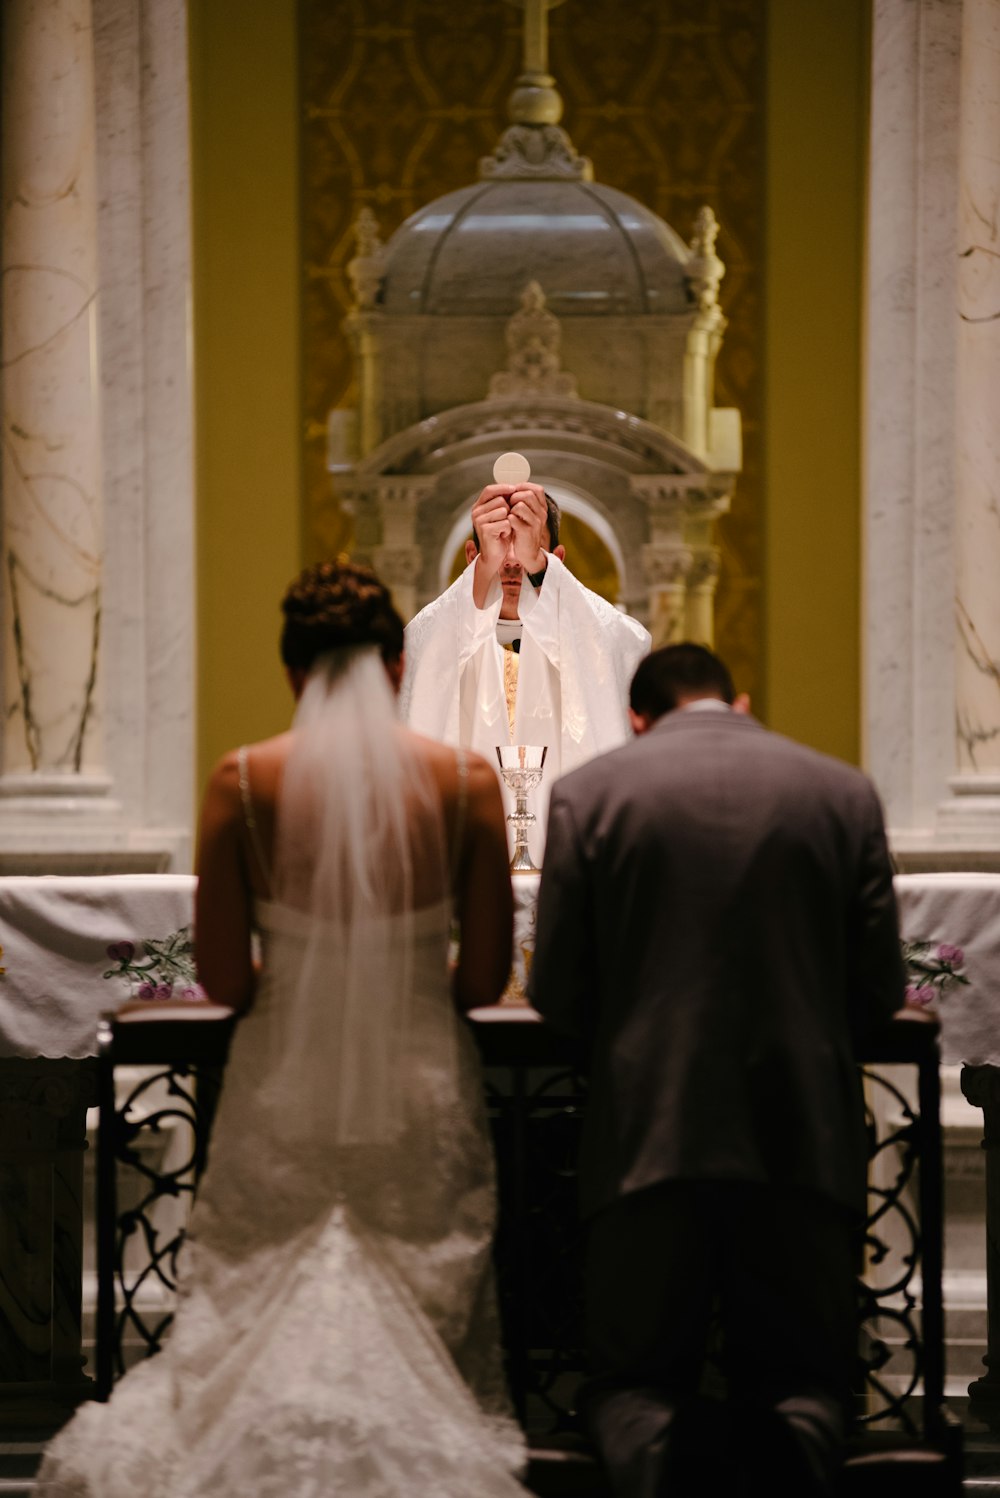 Catholic Wedding Pictures Download Free Images On Unsplash